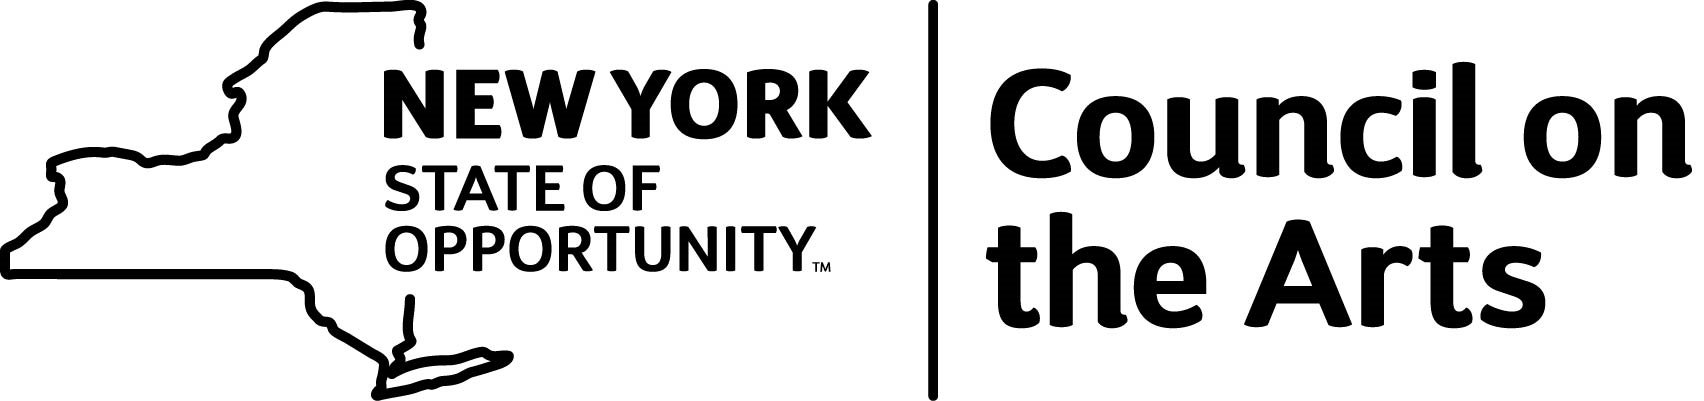 NYSCA Logo - Black.jpg